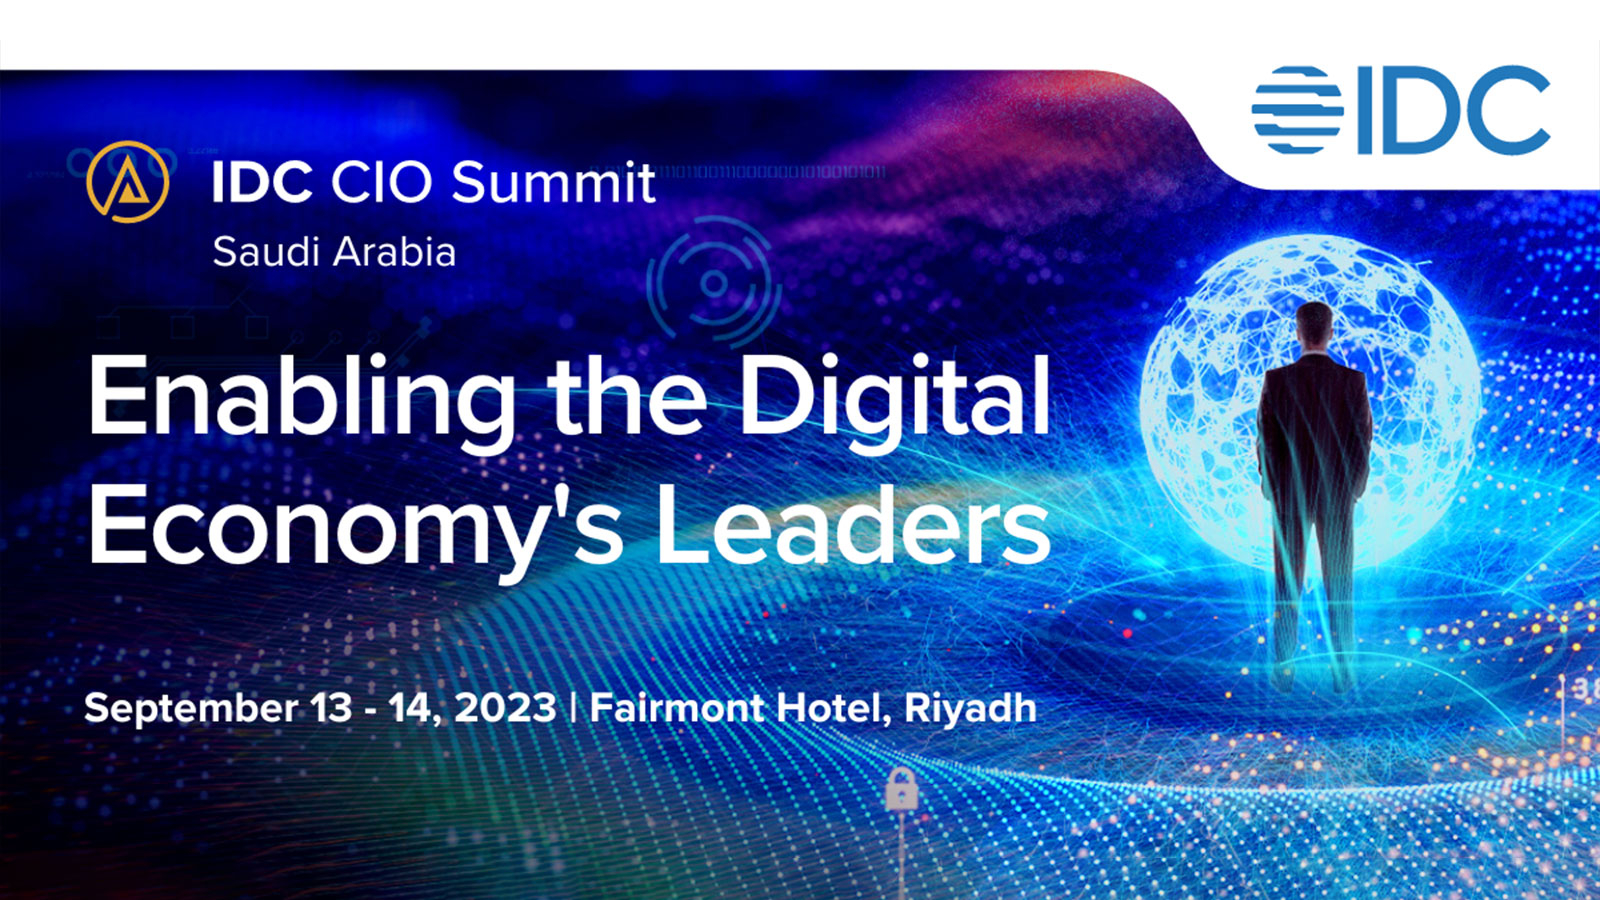 IDC to Explore the Future of Saudi Arabia's Digital Economy at CIO Summit in Riyadh